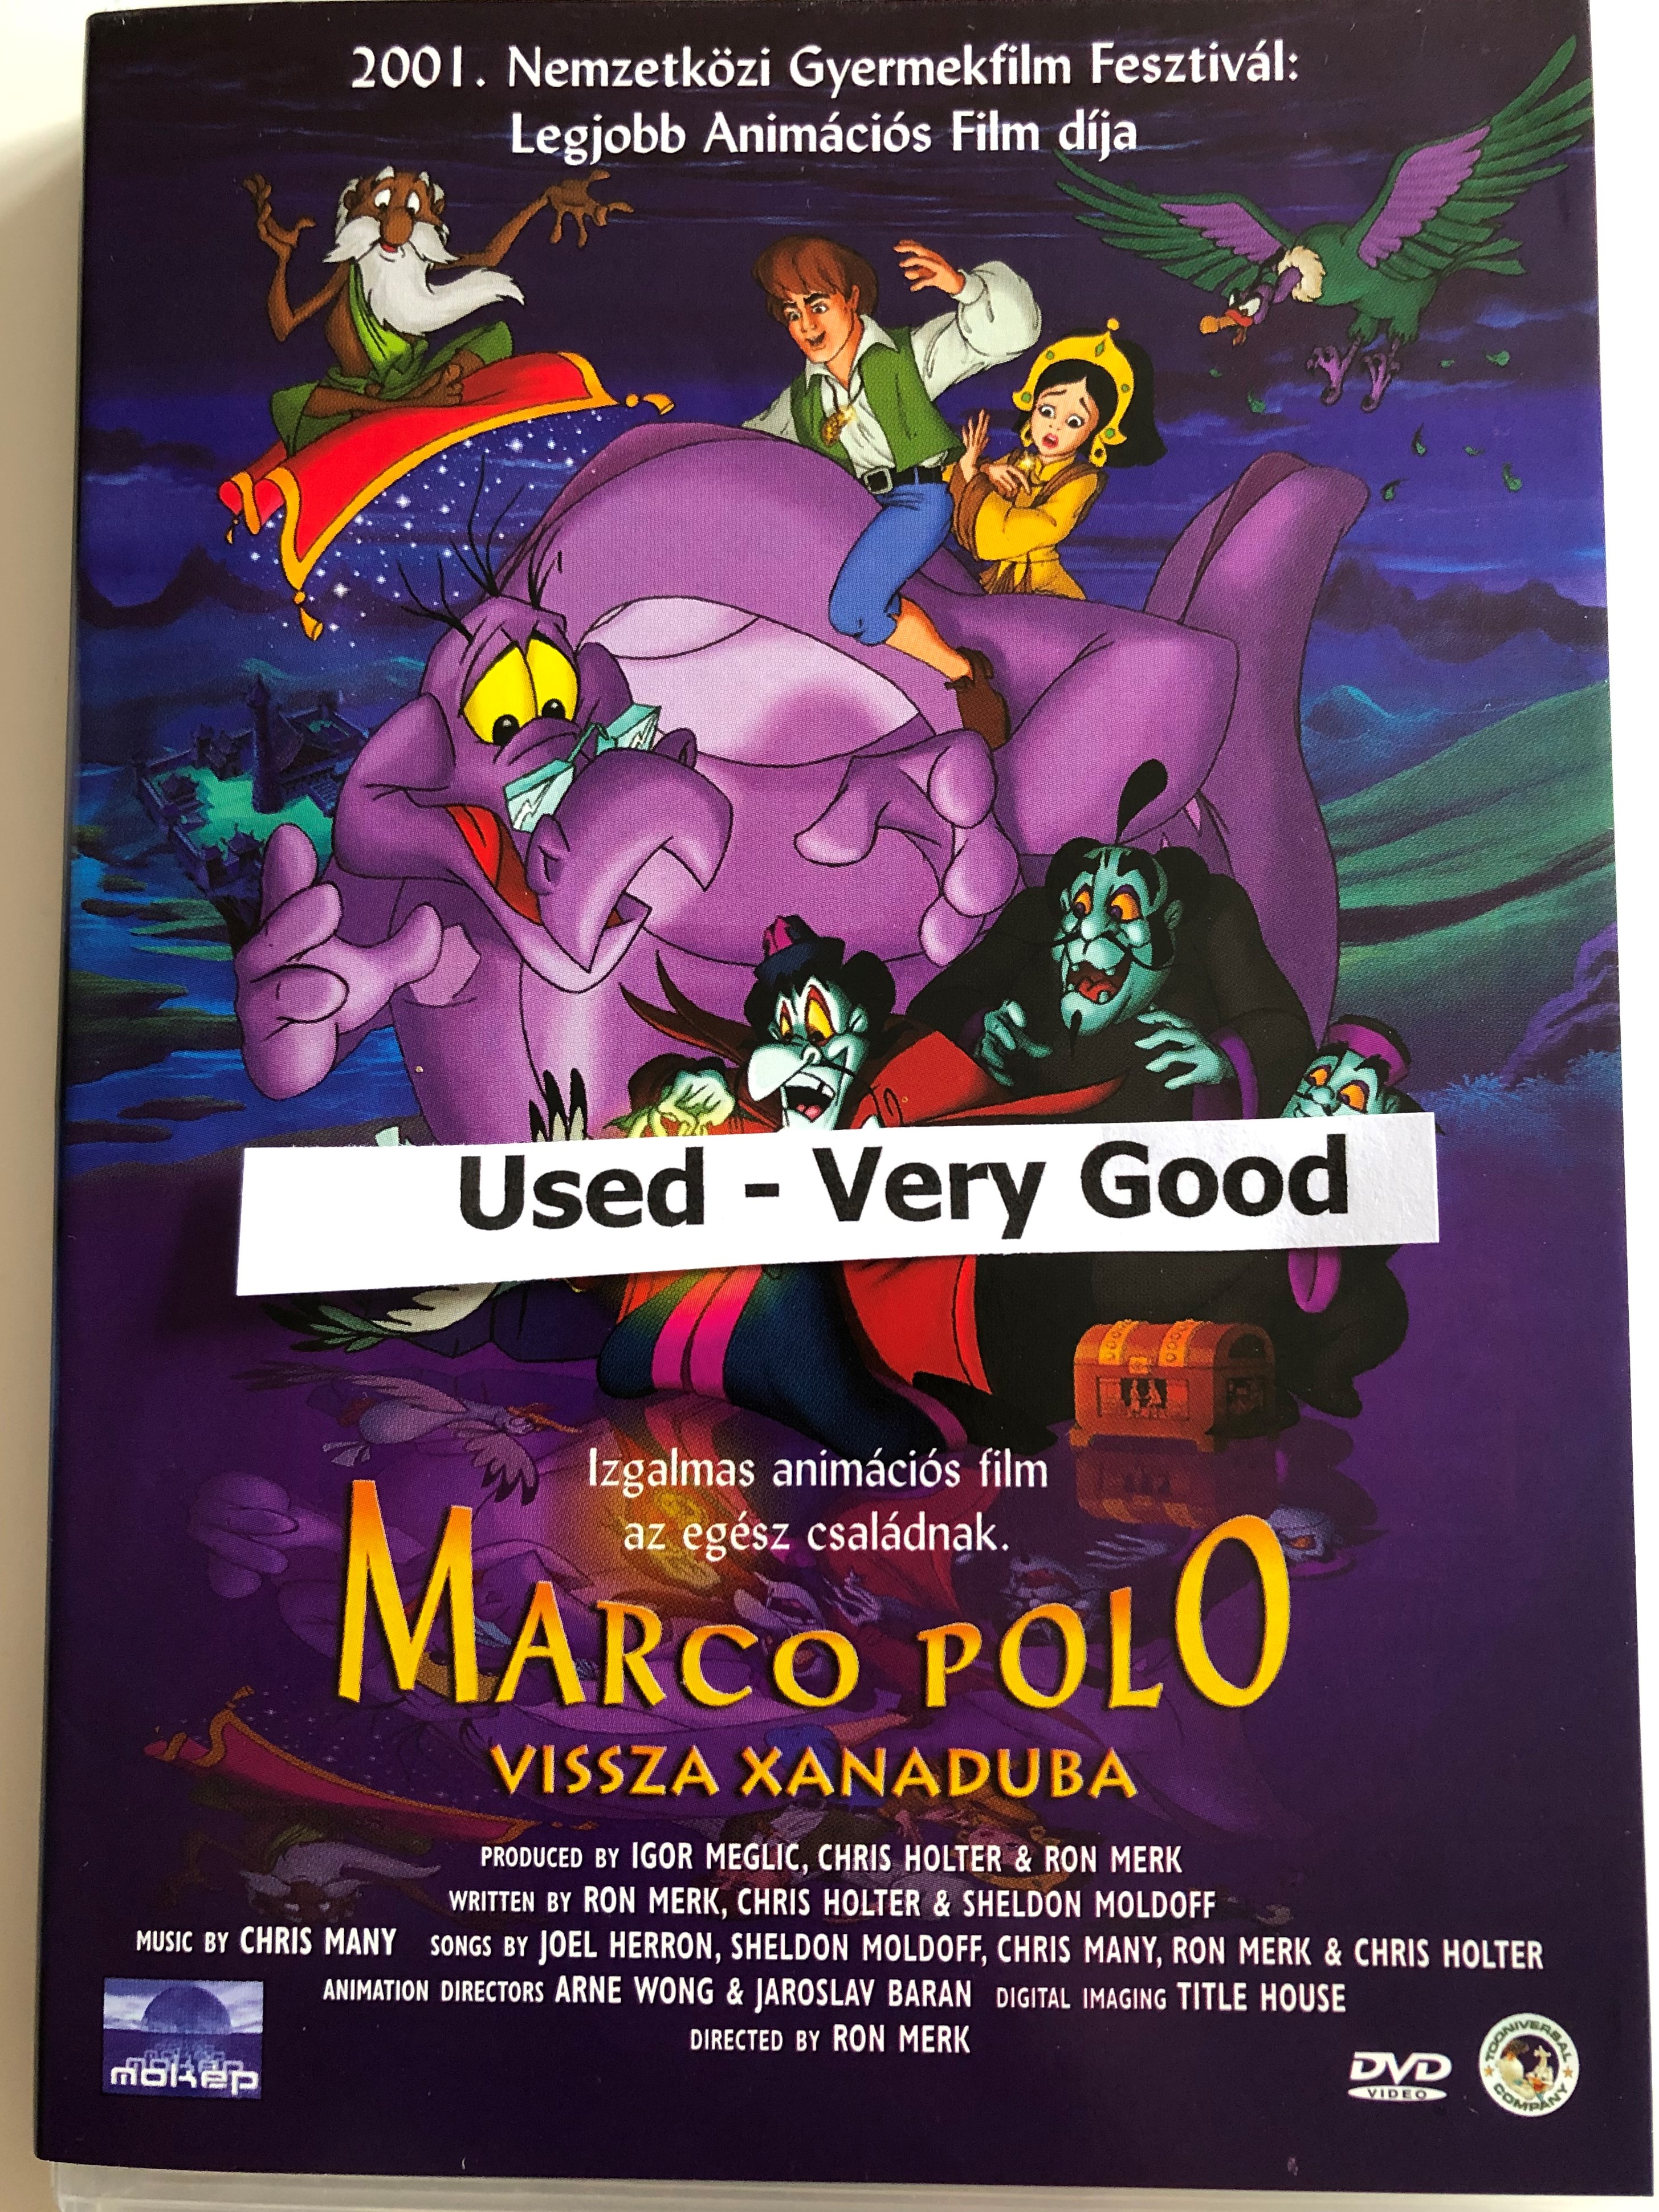 Marco Polo: Return to Xanadu DVD 2001 Marco Polo: Vissza Xanaduba /  Directed by Ron Merk / Starring: Paul Ainsley, Alan Altshuld, Nicholas  Gonzalez - Bible in My Language